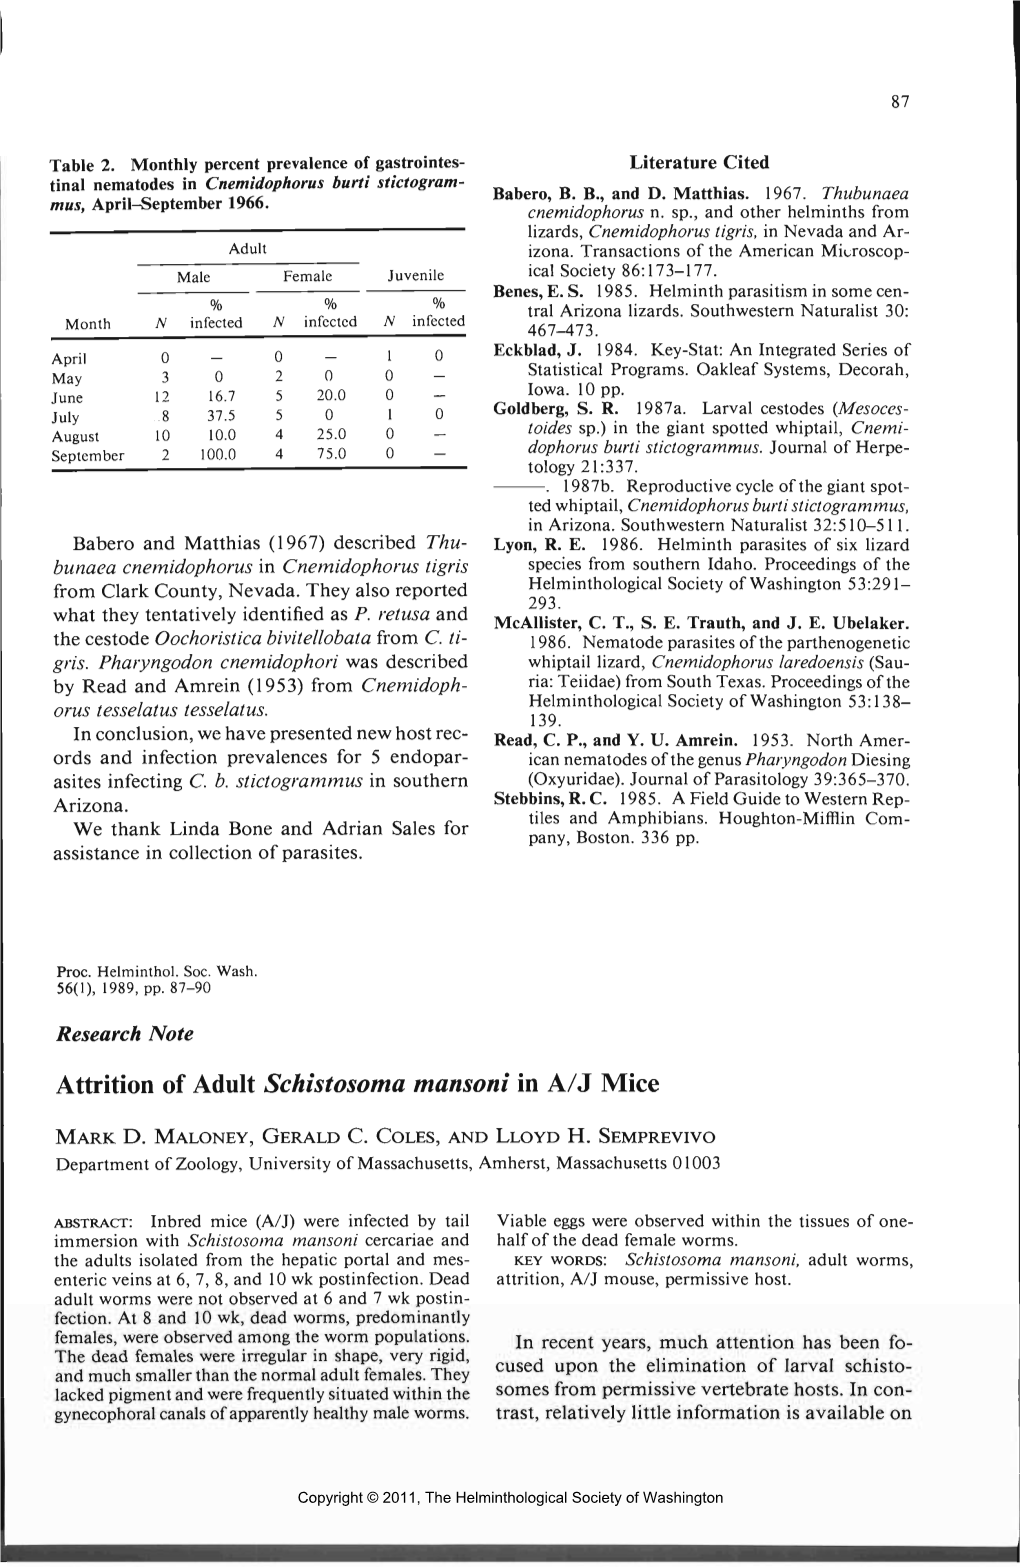 Attrition of Adult Schistosoma Mansoniin A/J Mice